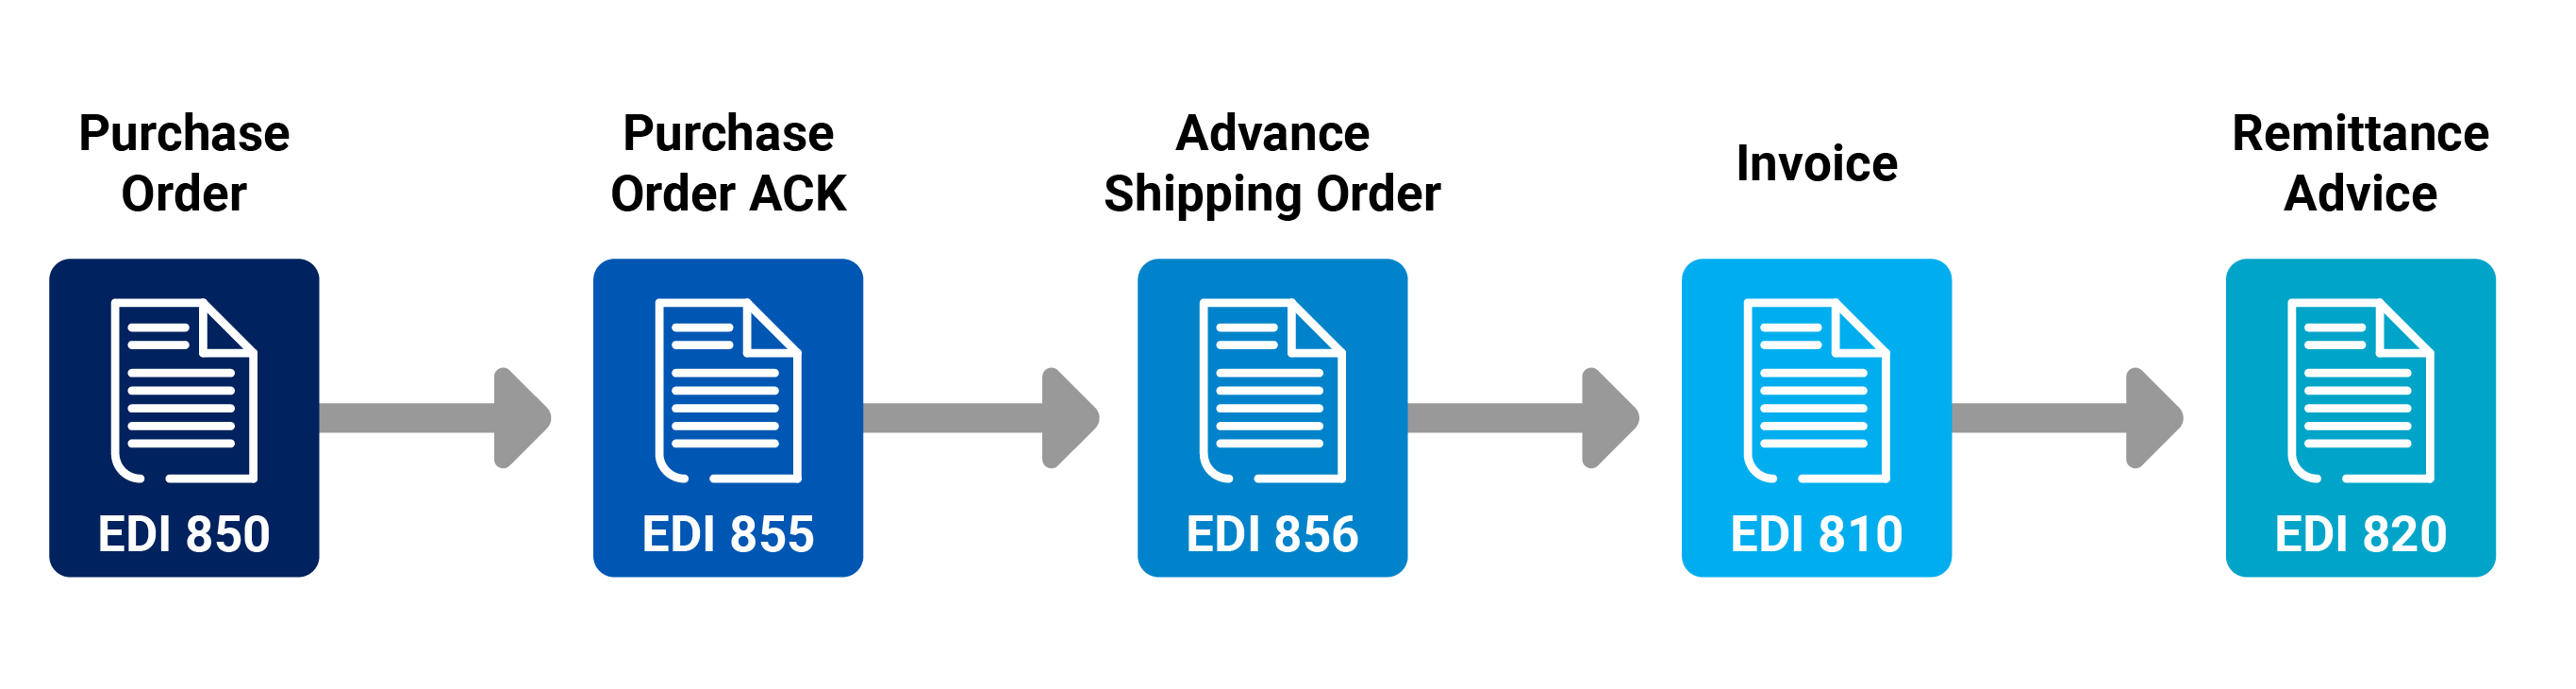 Wholesale and distribution EDI transaction documents